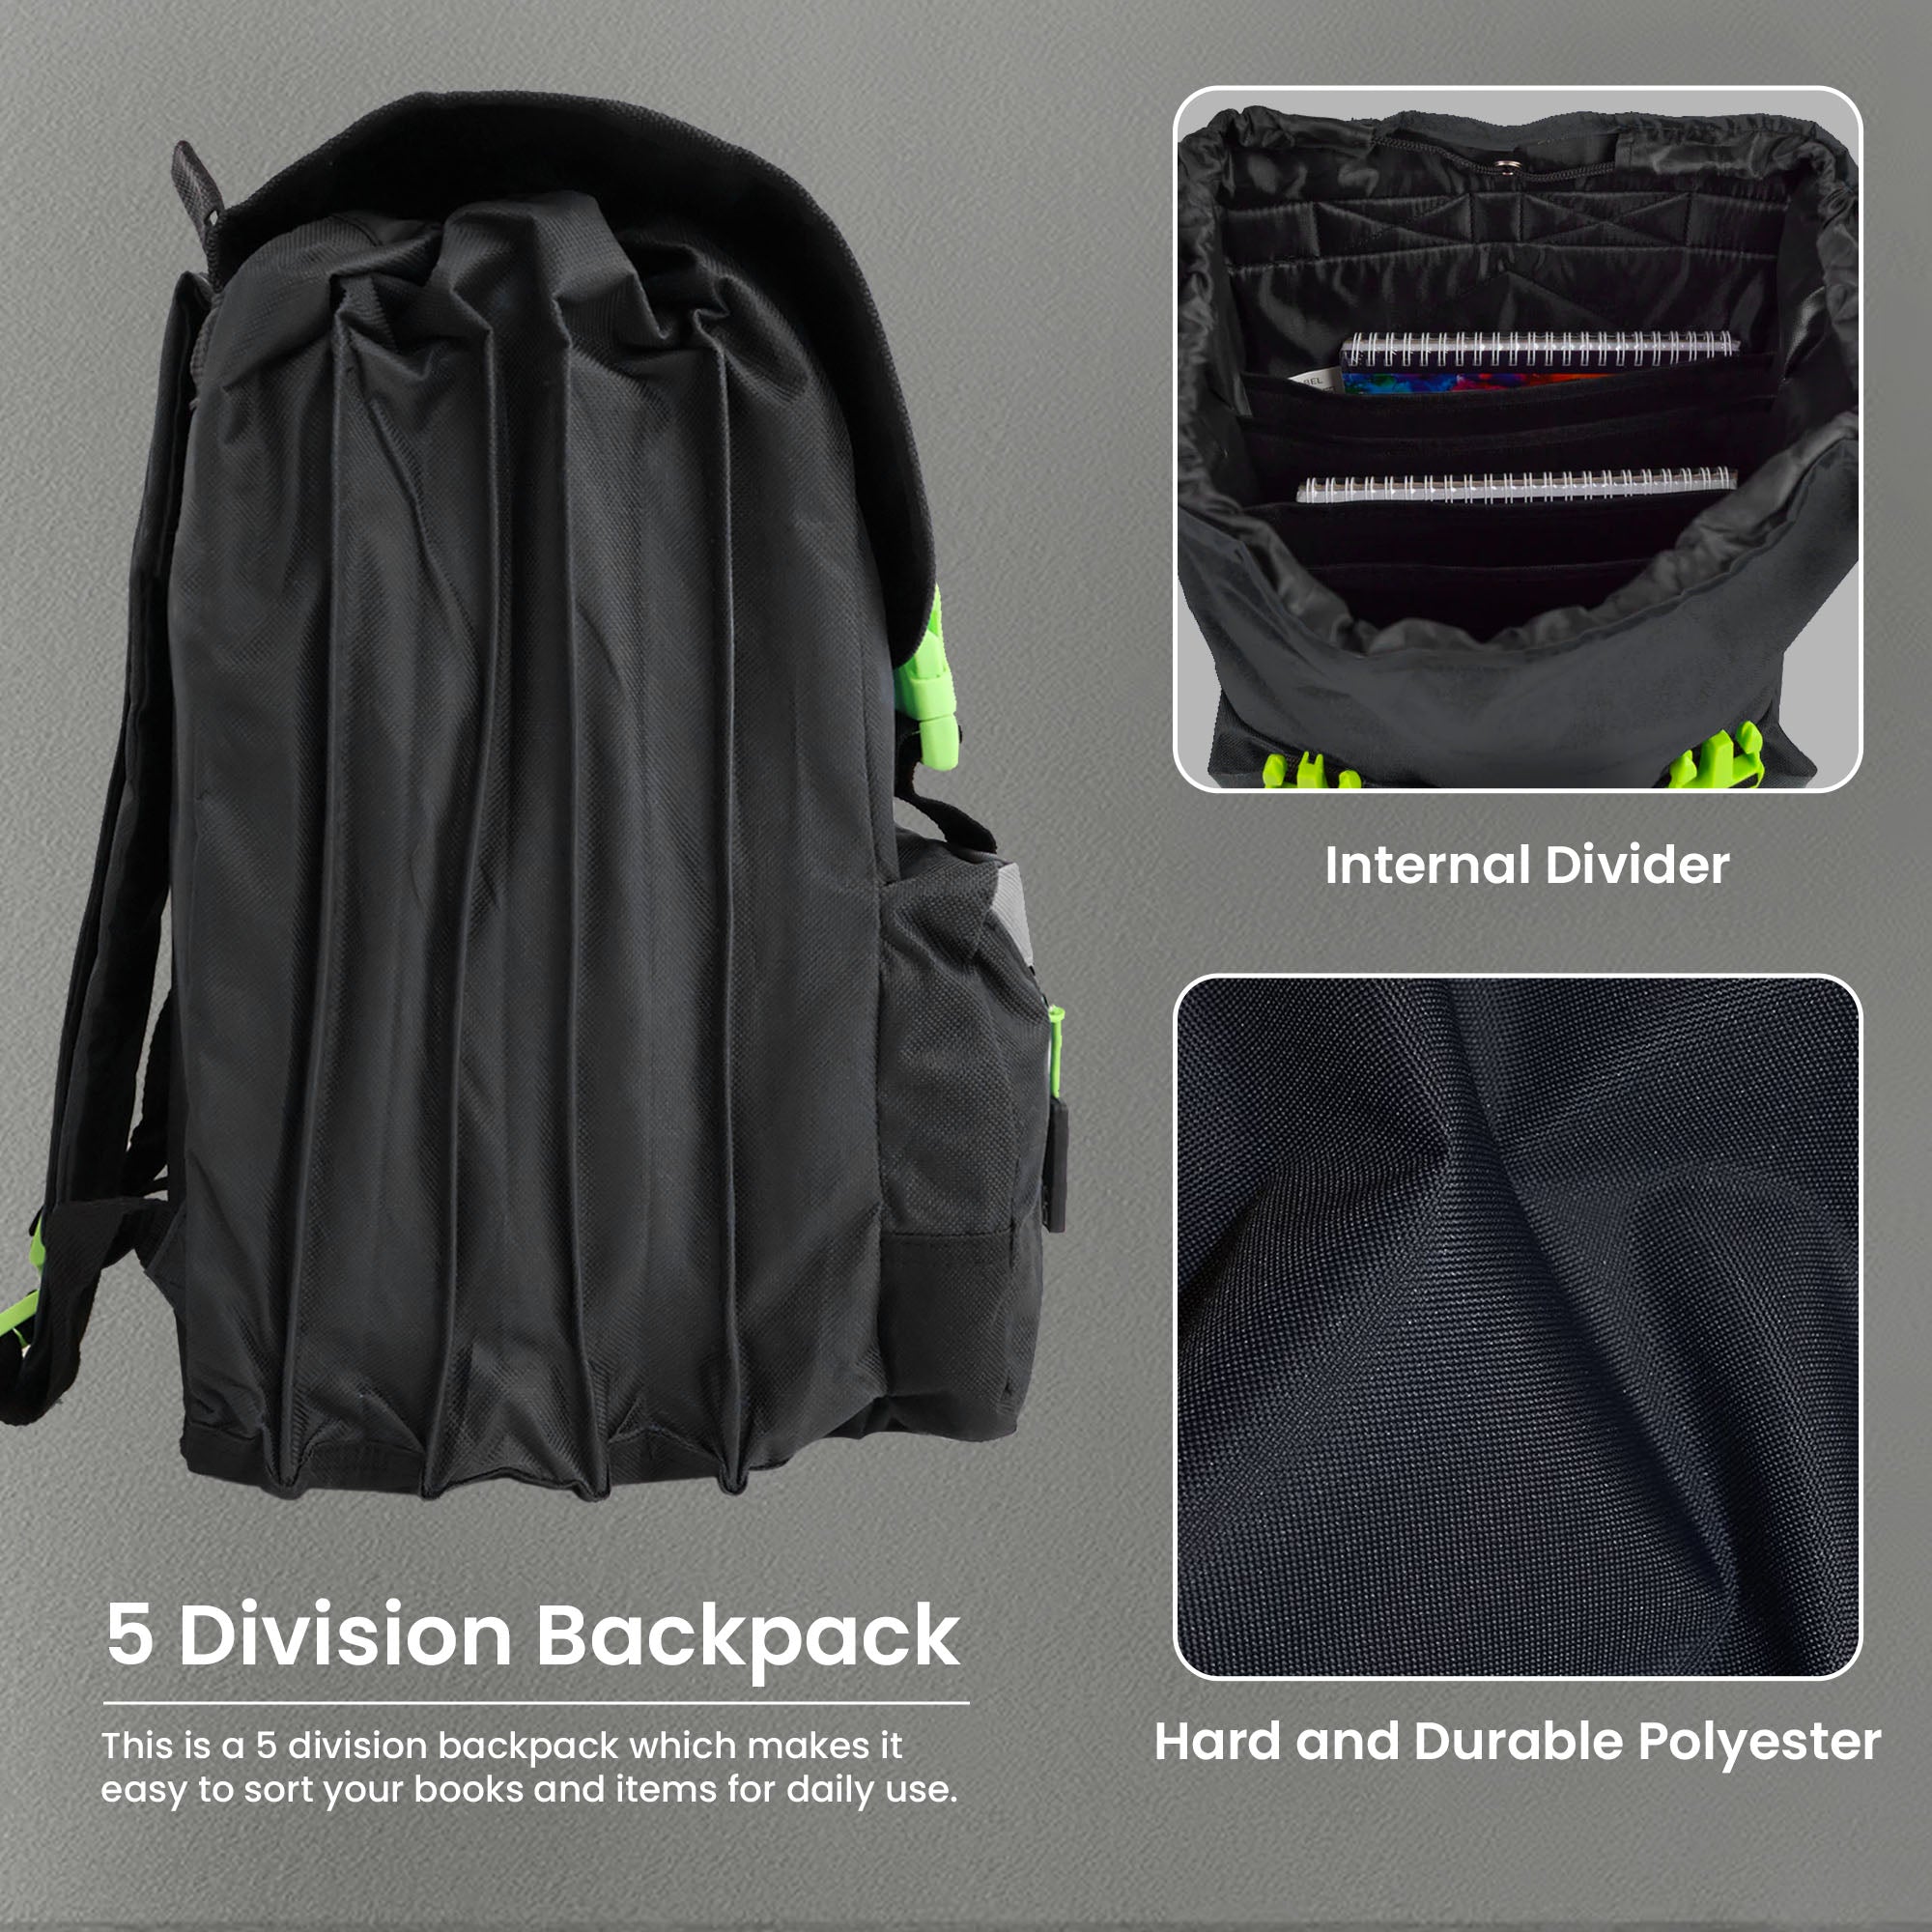 5-Division Backpack